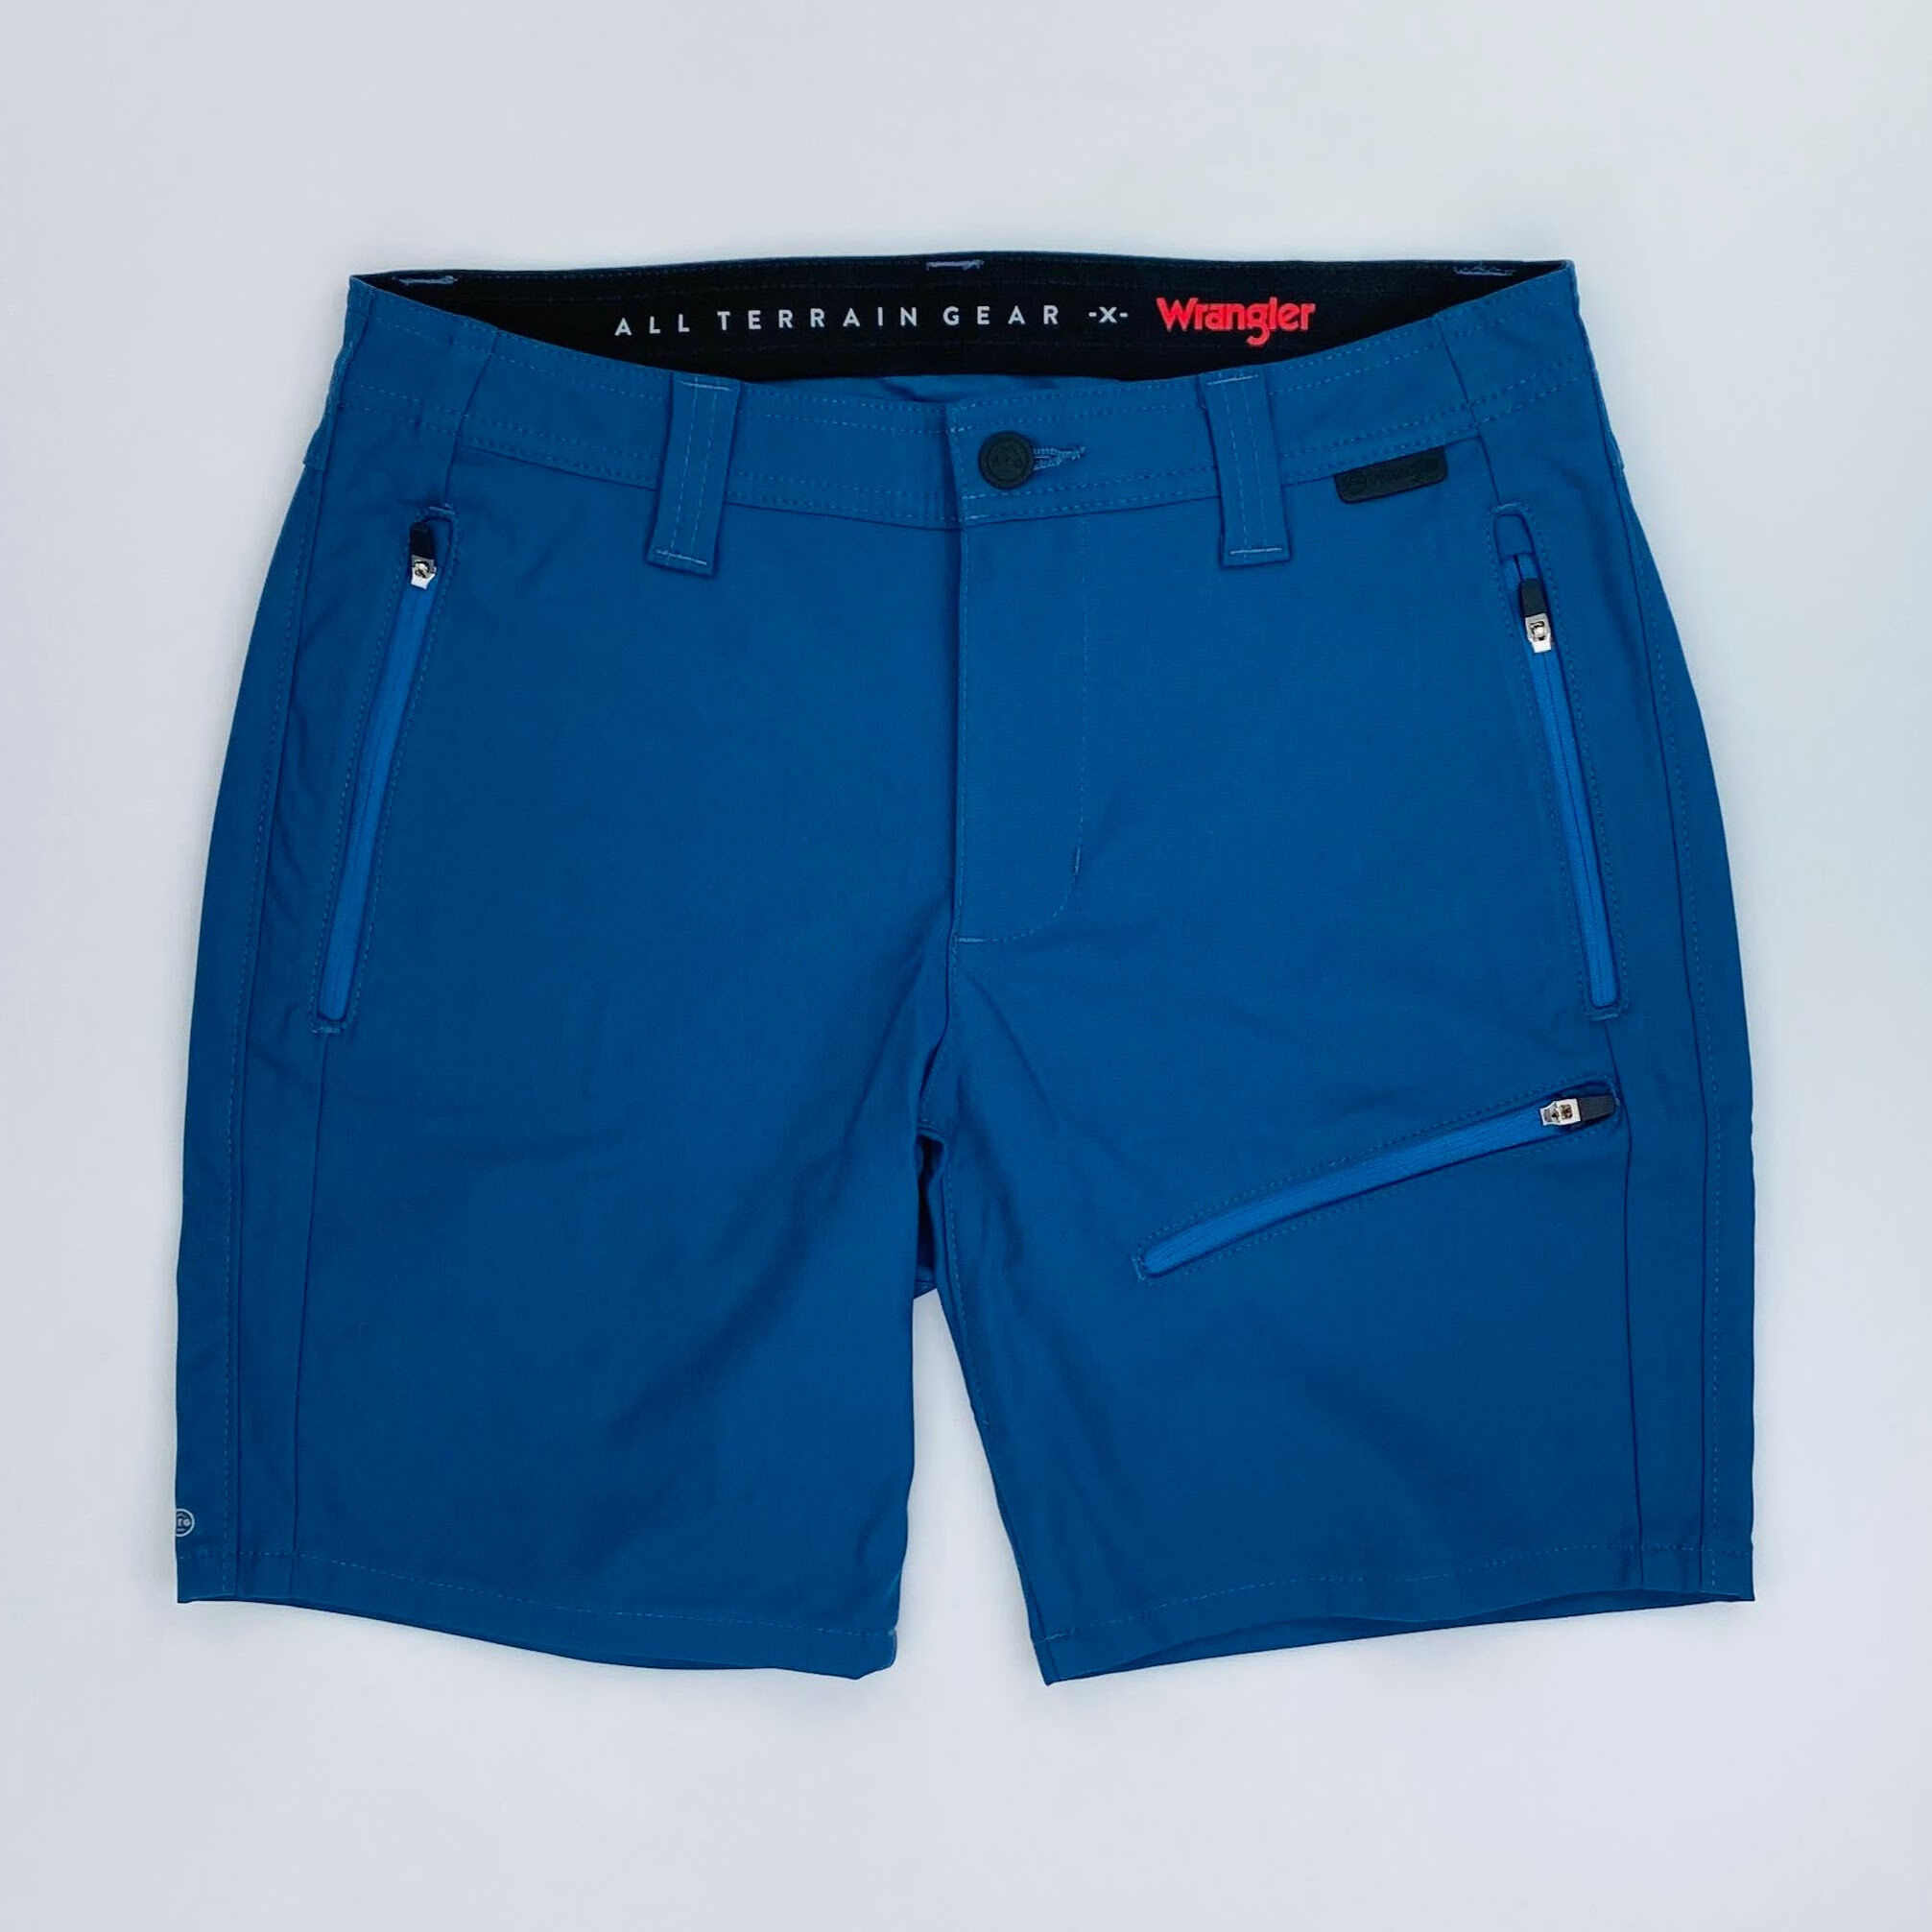 Wrangler Fwds Zippkt Short - Second Hand Shorts - Women's - Blue - US 28 | Hardloop